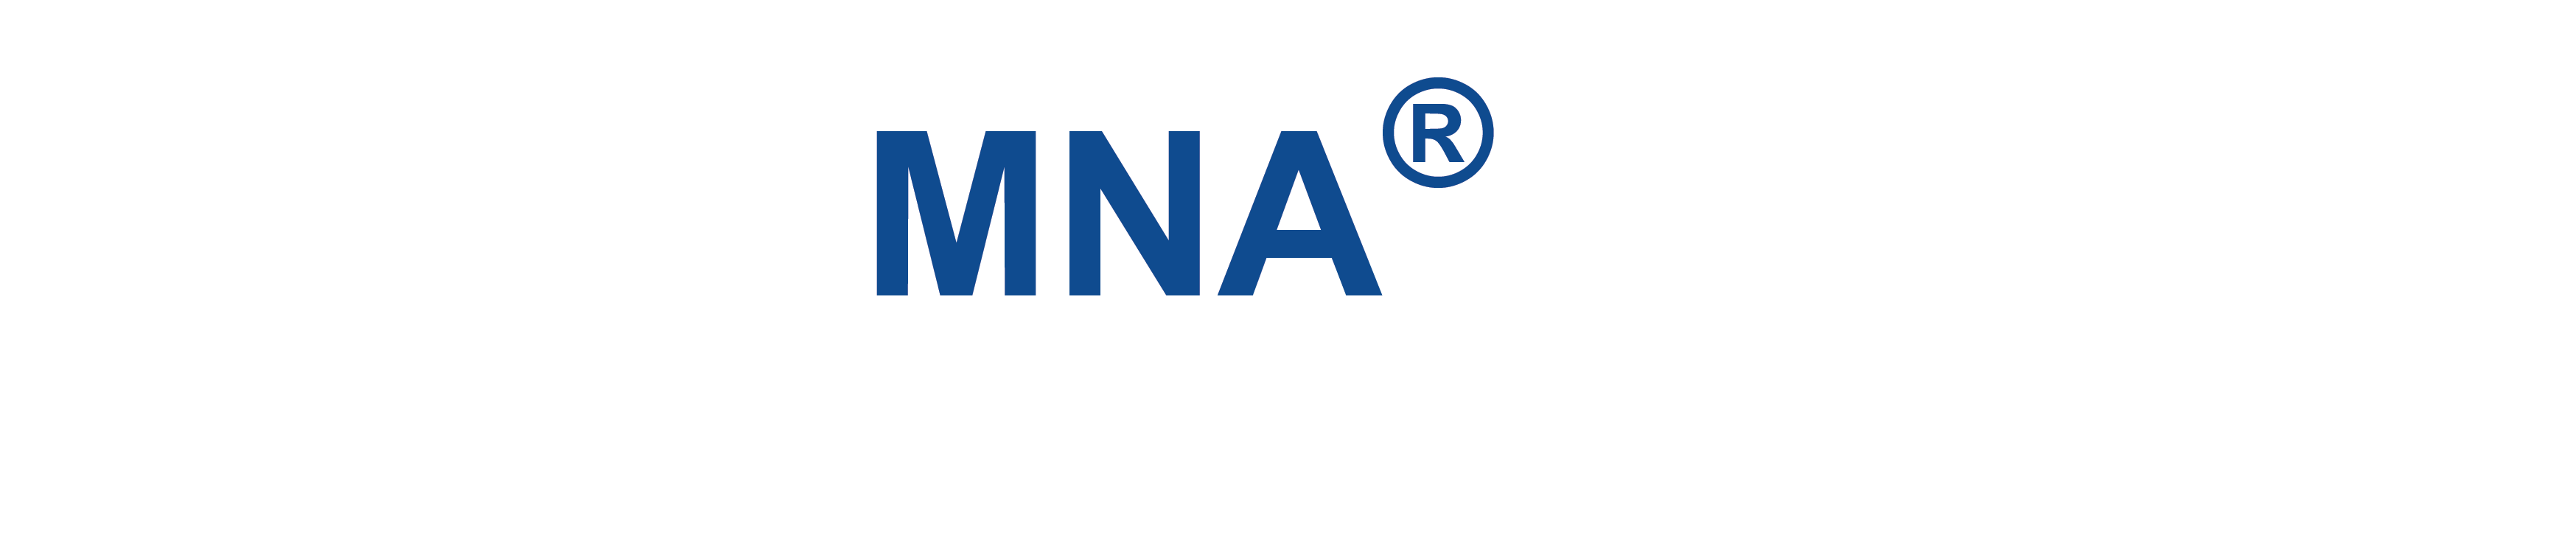 MNA logo short